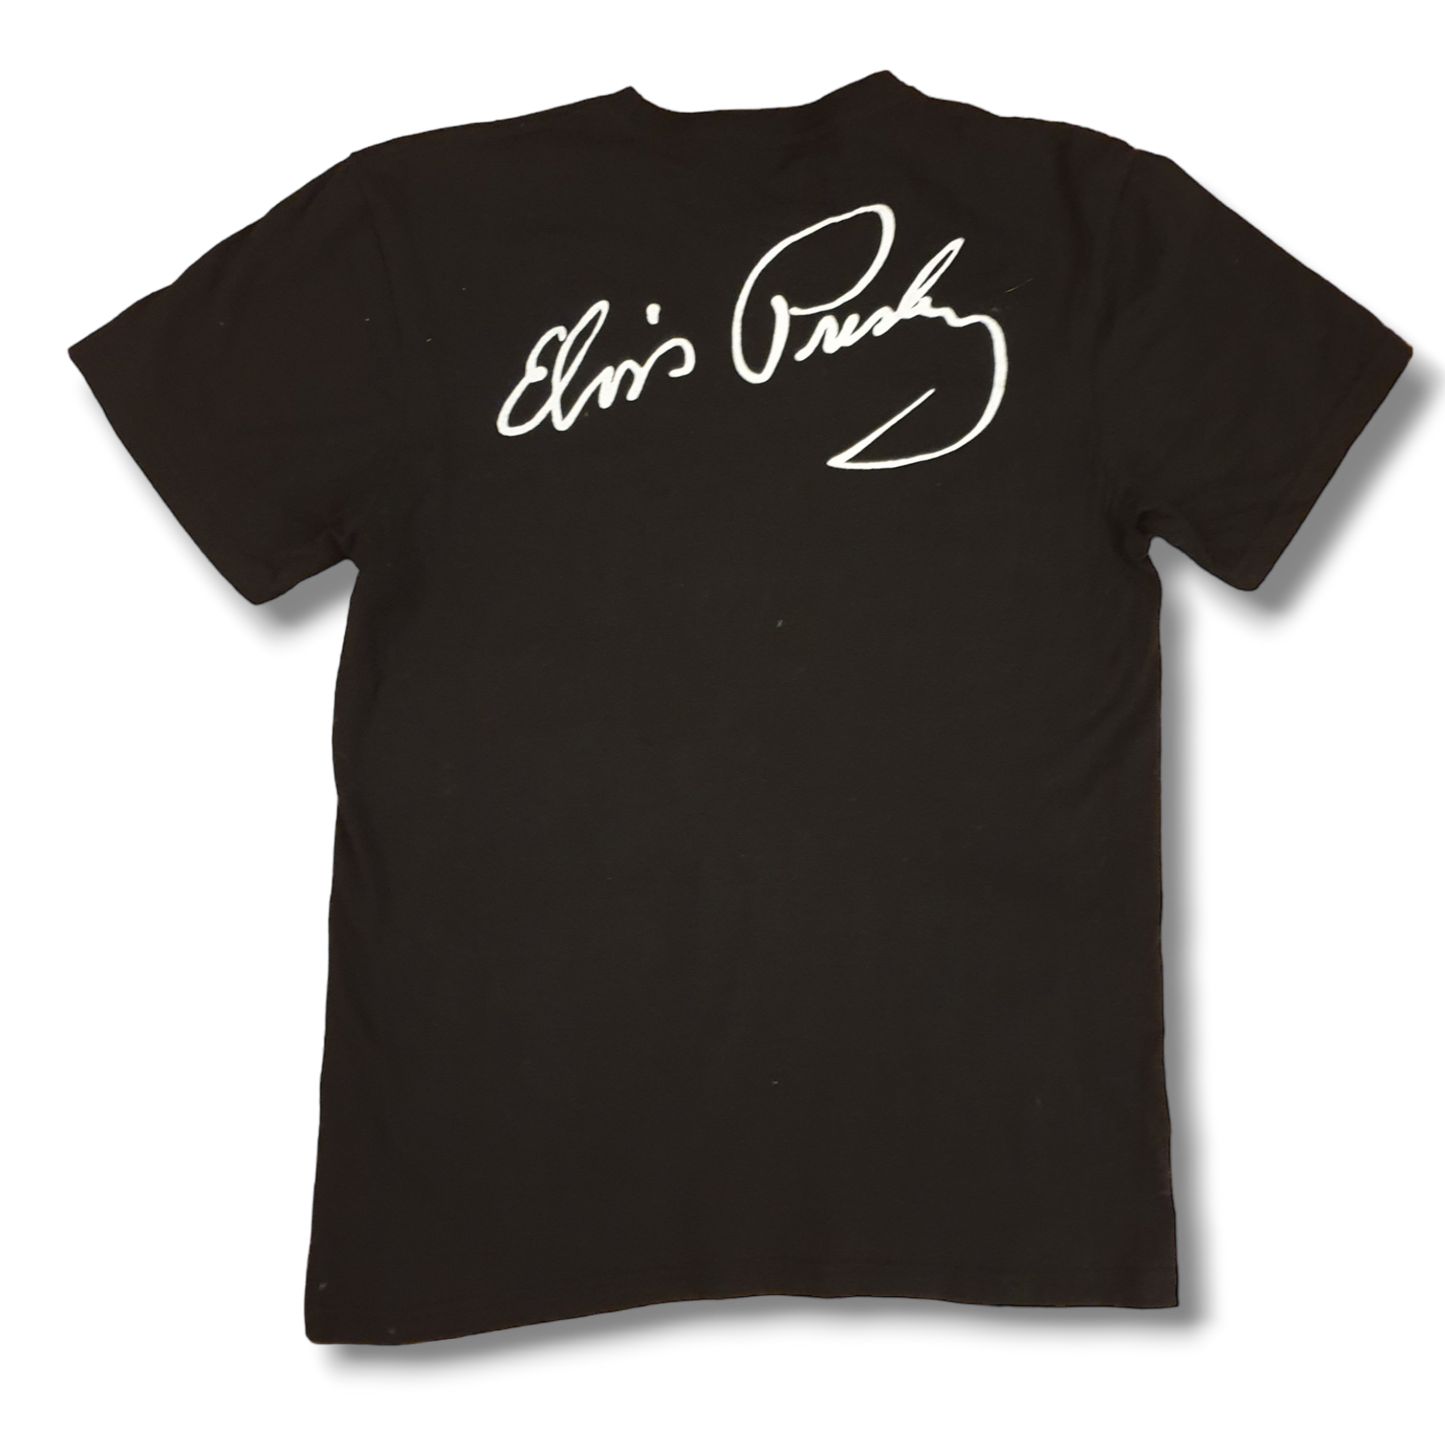 Elvis Presley T-Shirt S